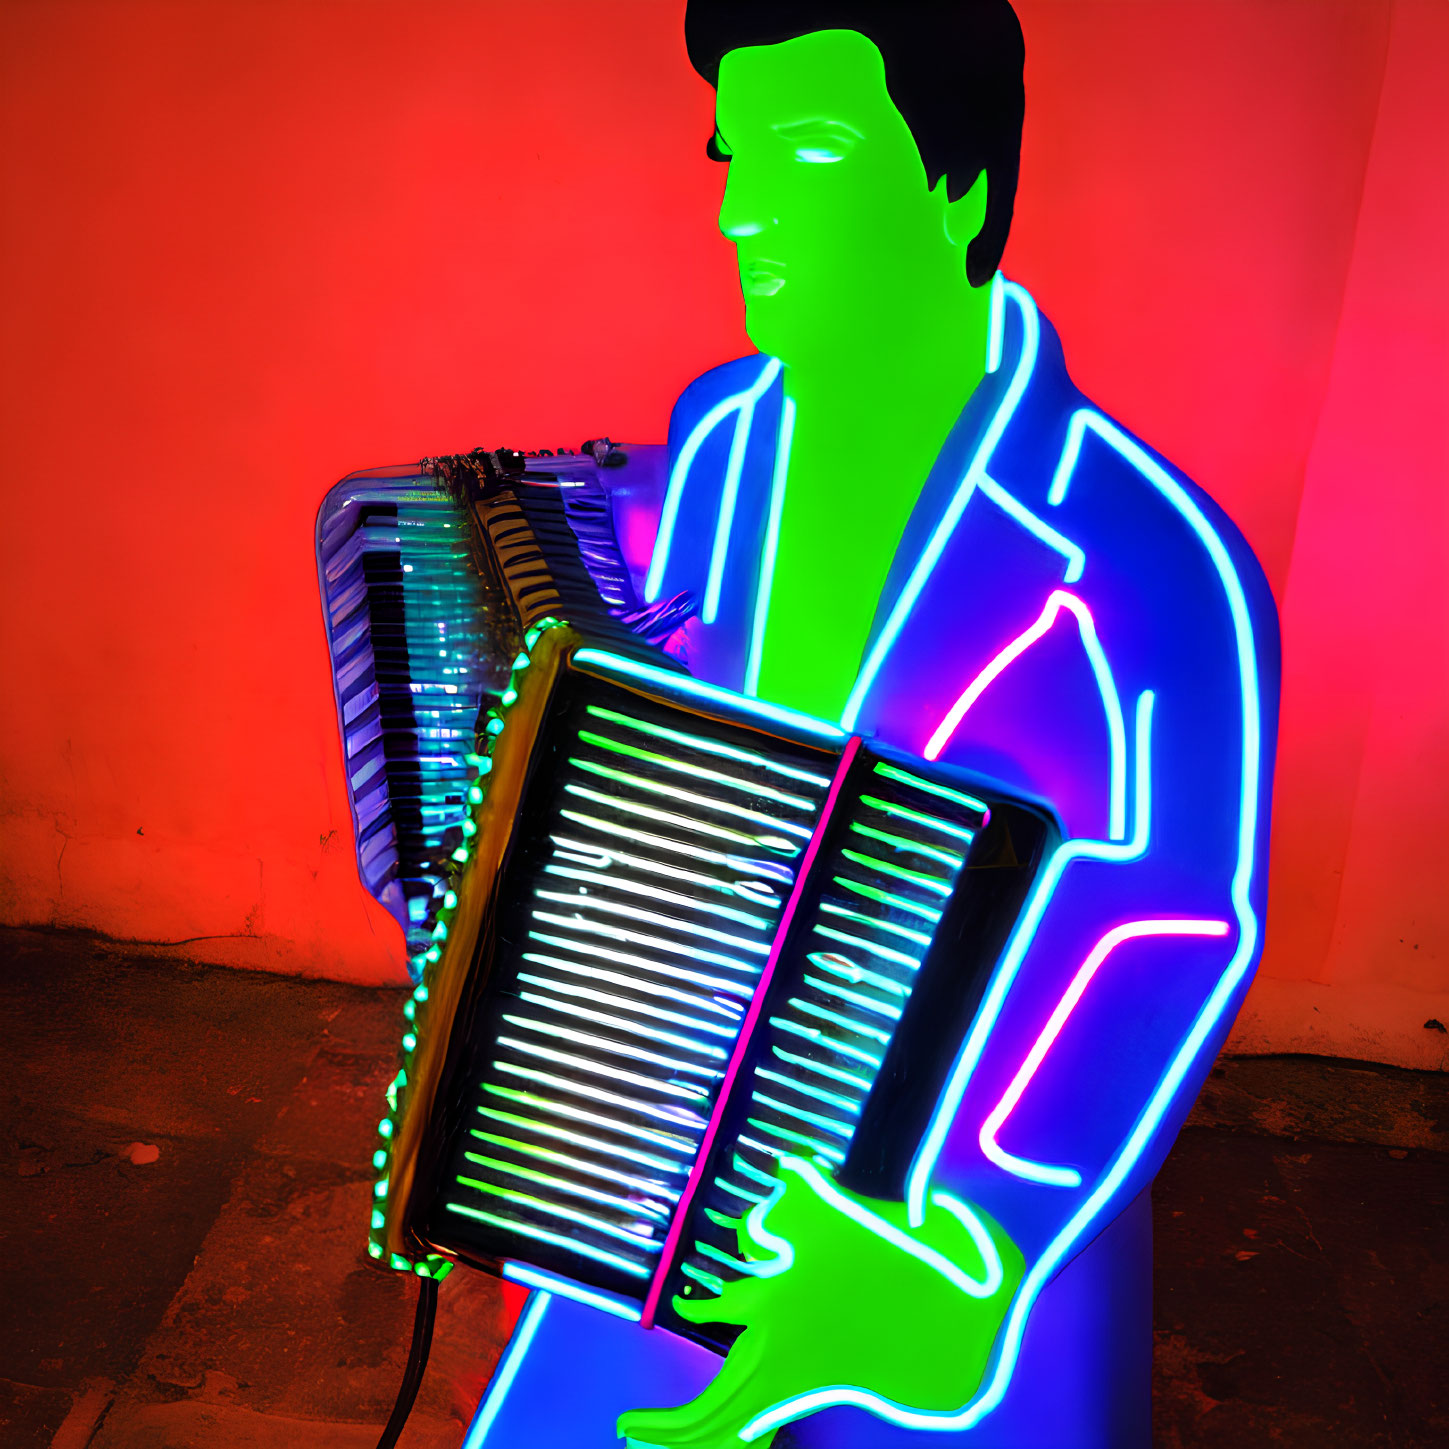 Colorful neon-lit accordion player against orange backdrop